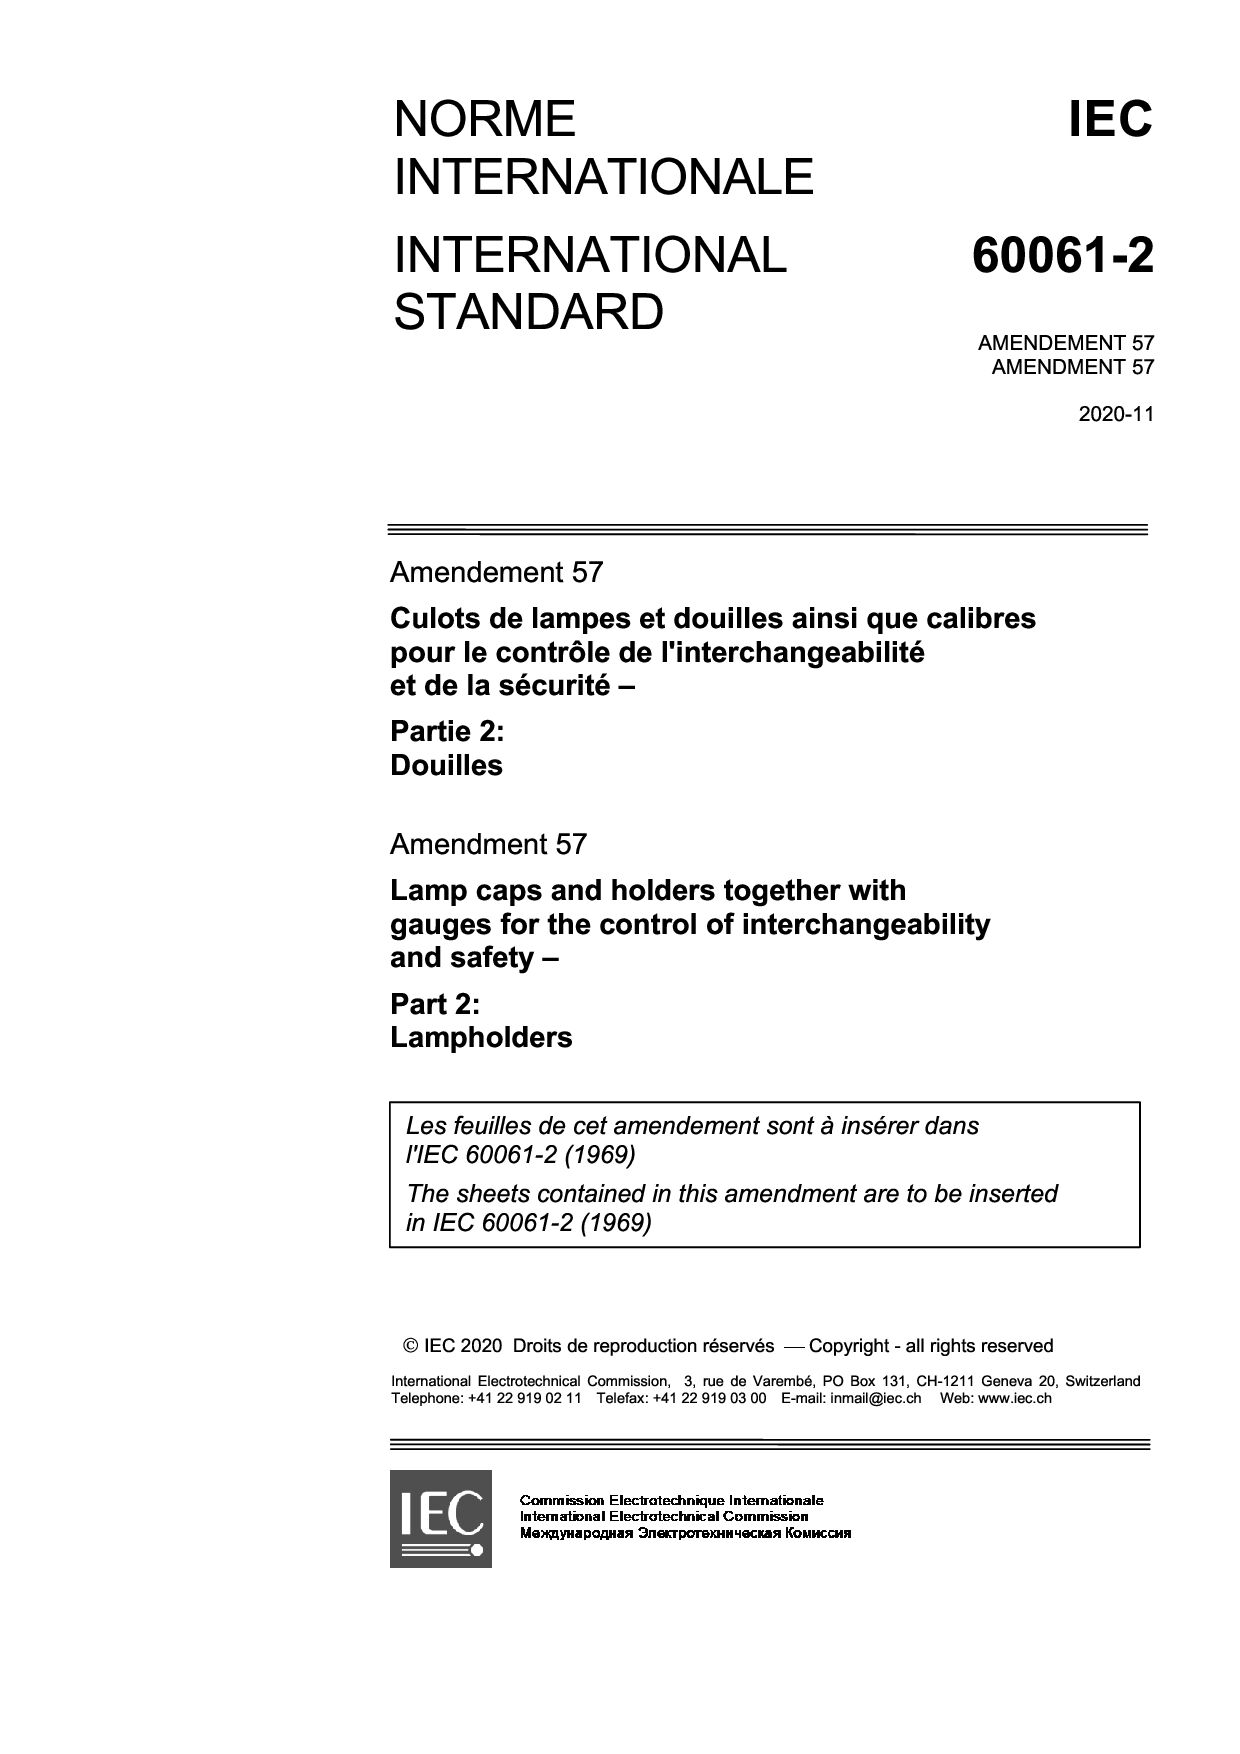 IEC 60061-2:1969/AMD57:2020封面图